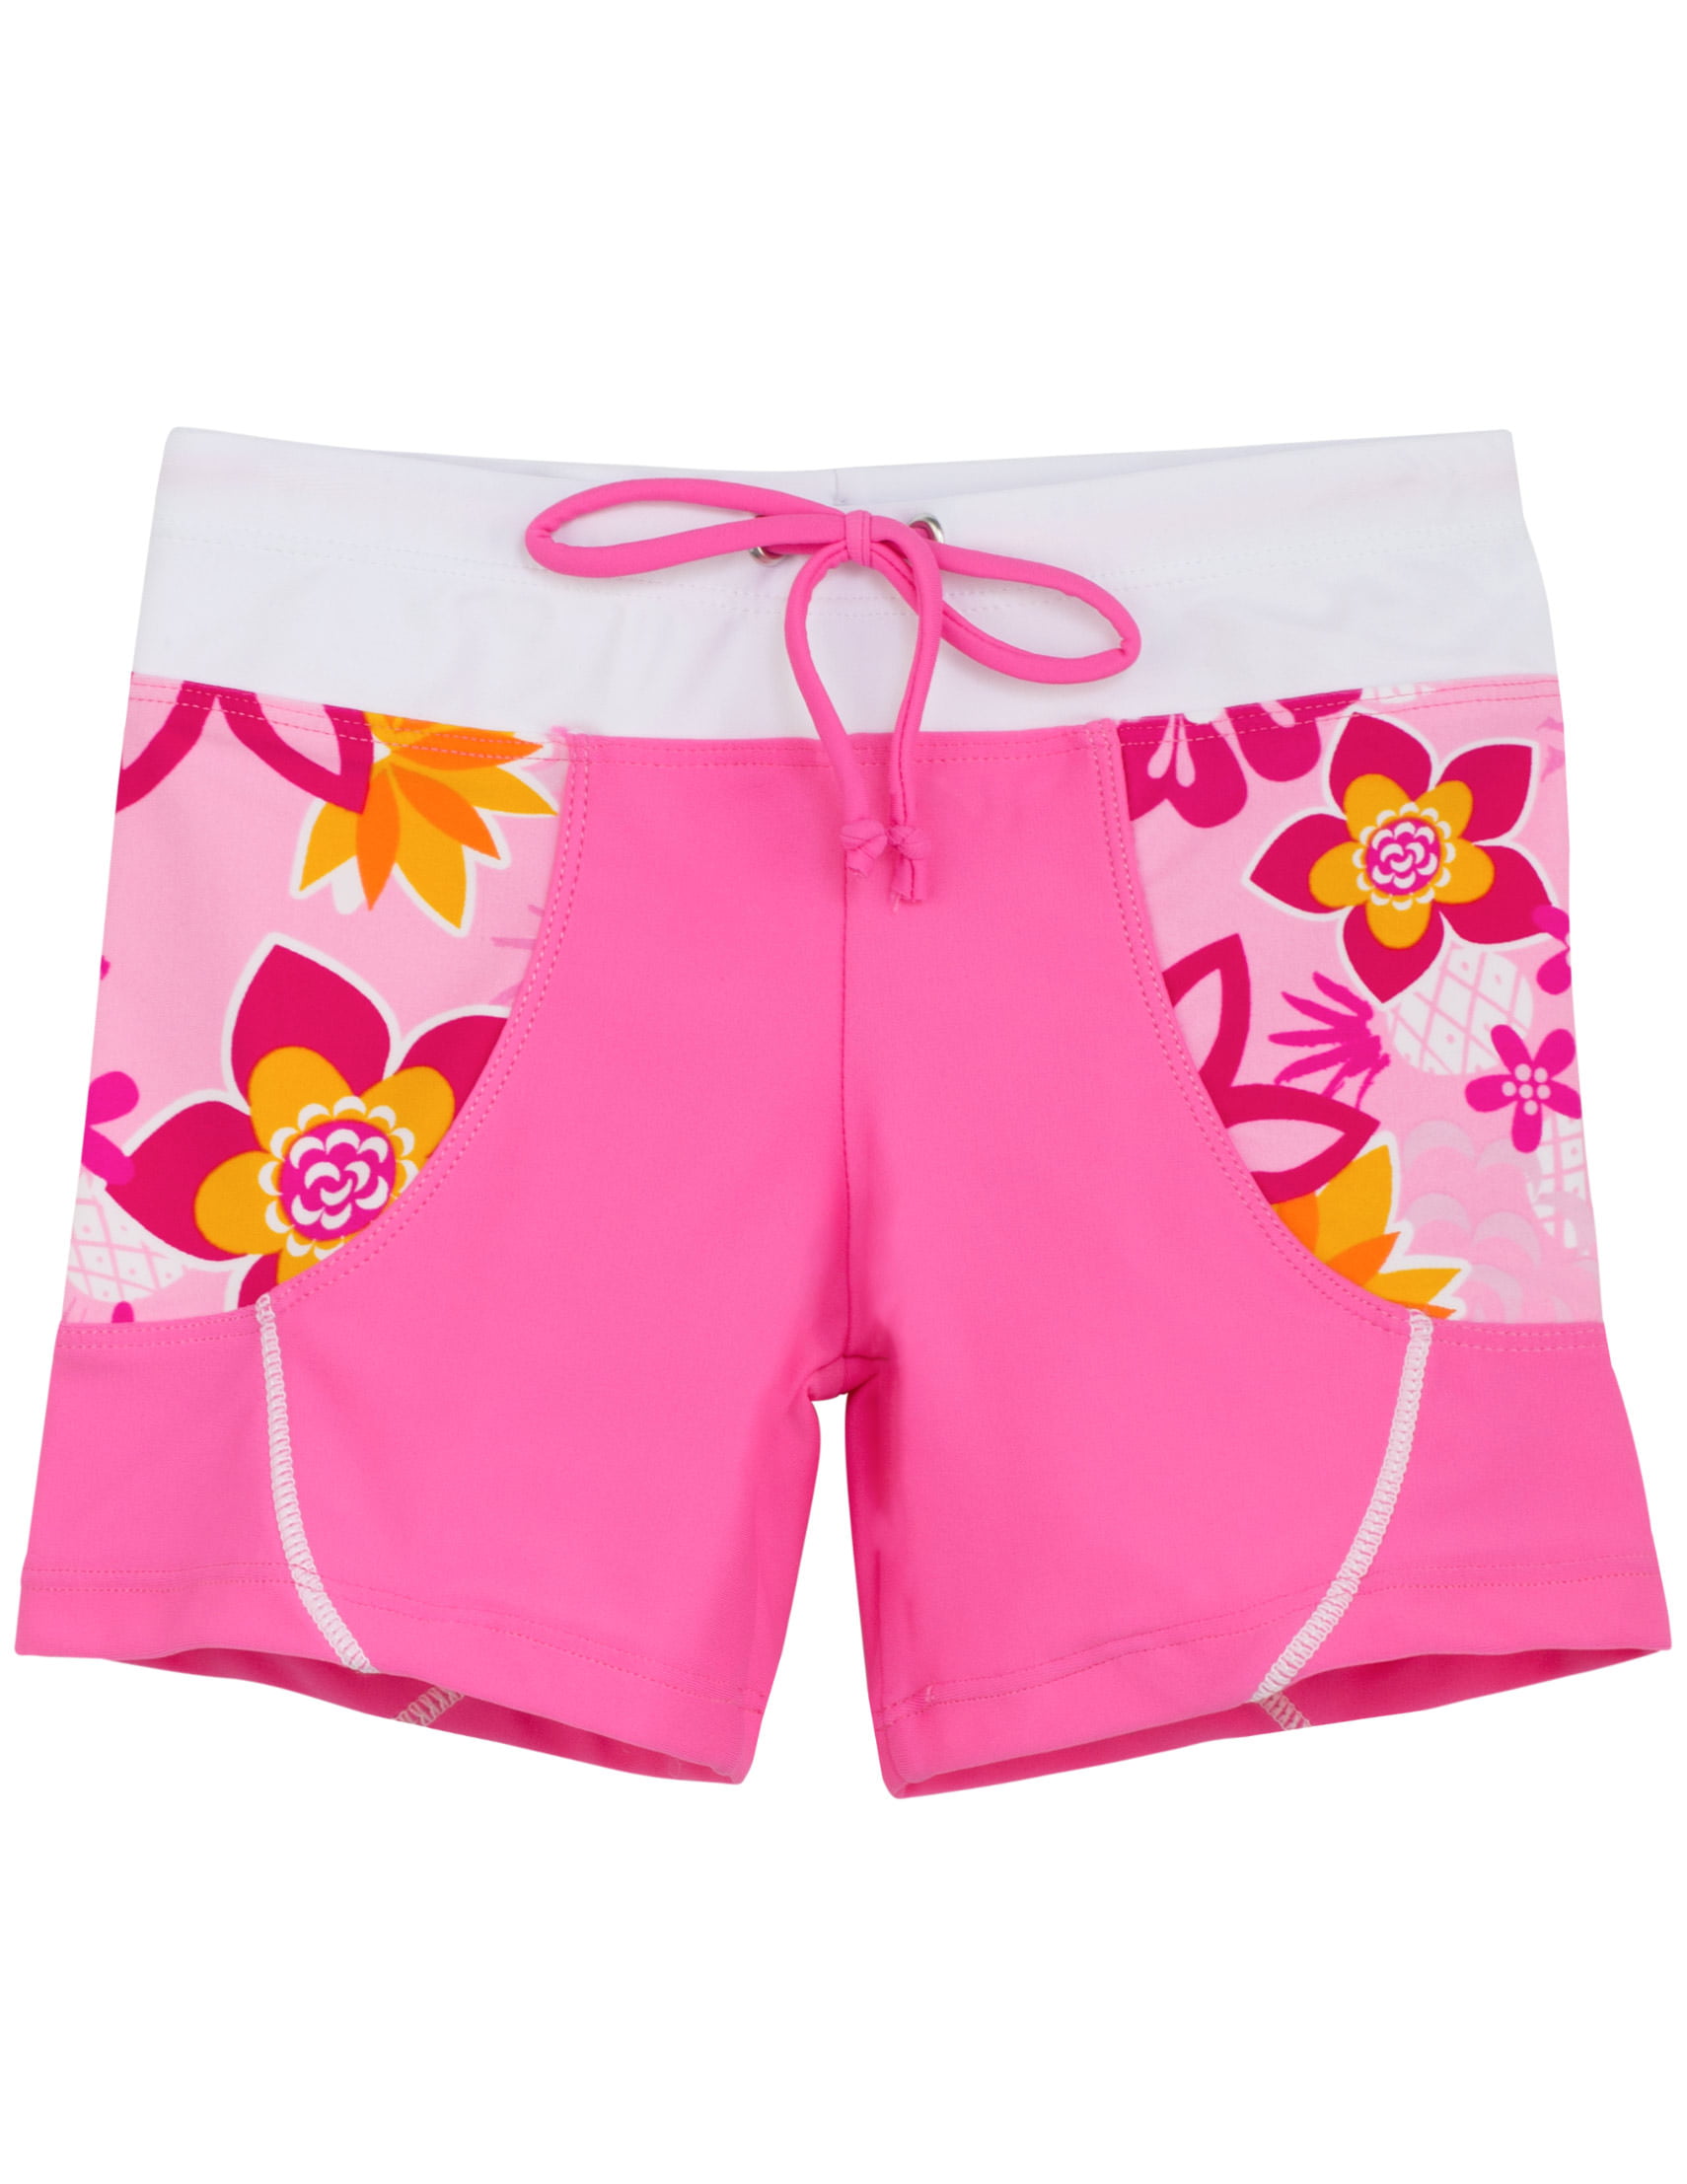 Sun Protection Swimsuit Tuga Girls Reusable Swim Diapers UPF 50 